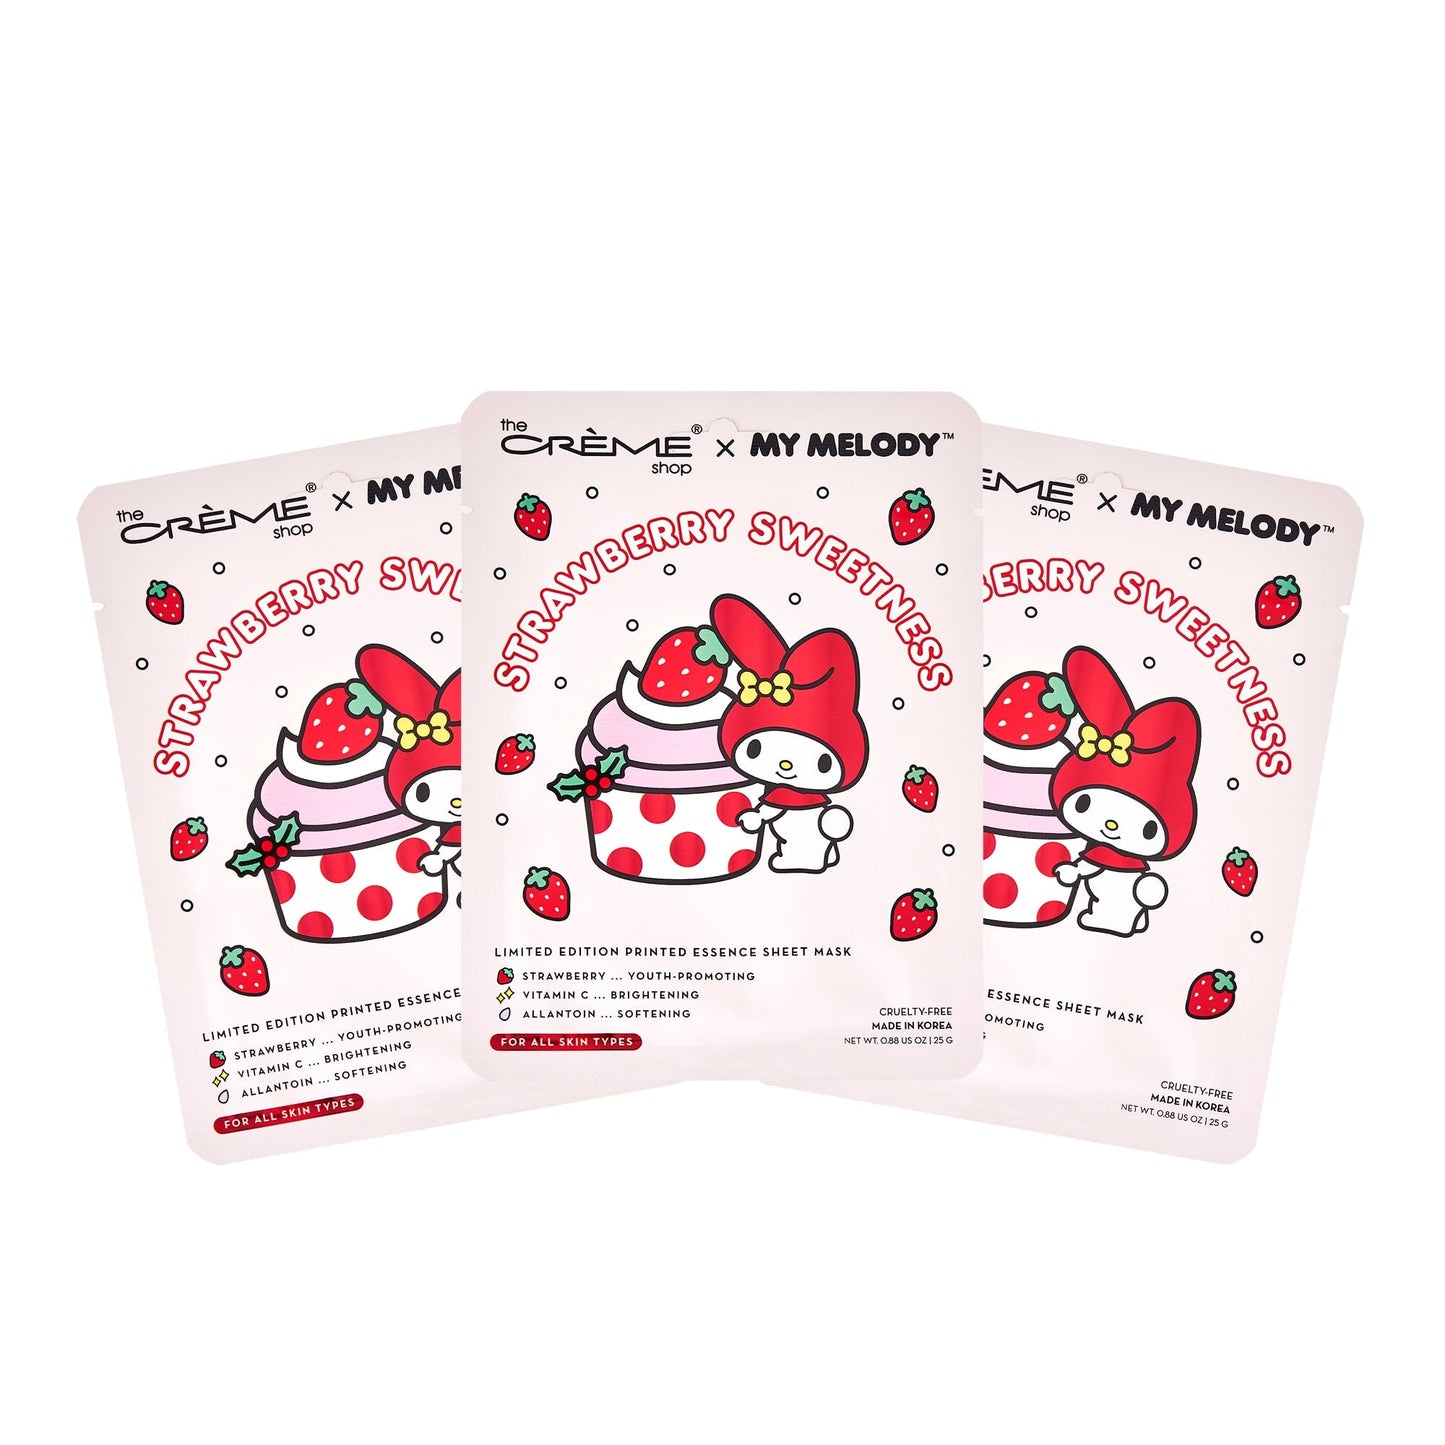 My Melody Strawberry Sweetness Printed Essence Sheet Mask (Set of 3) Sheet Masks The Crème Shop x Sanrio 